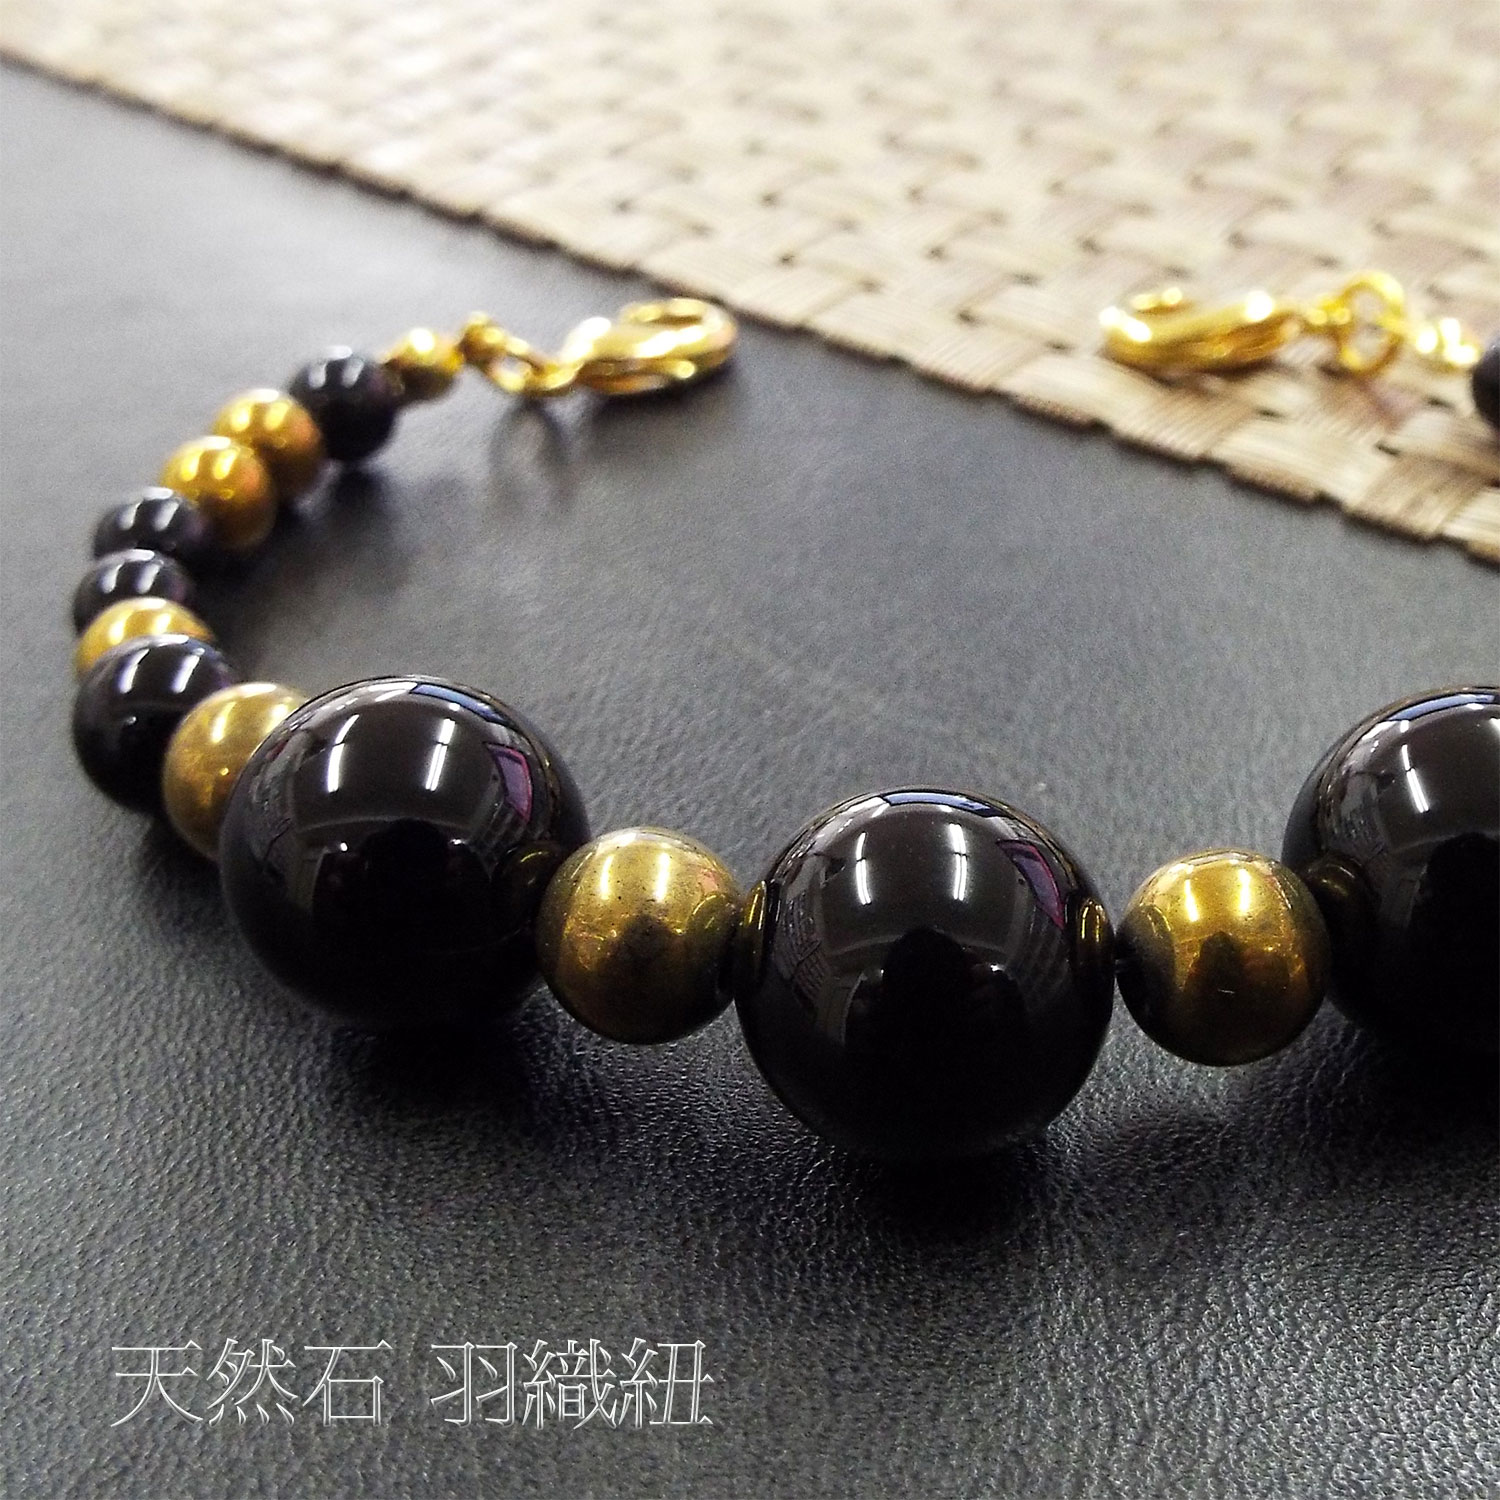  natural stone feather woven cord kimono small articles dressing accessories onyx Gold .ma tight Power Stone 